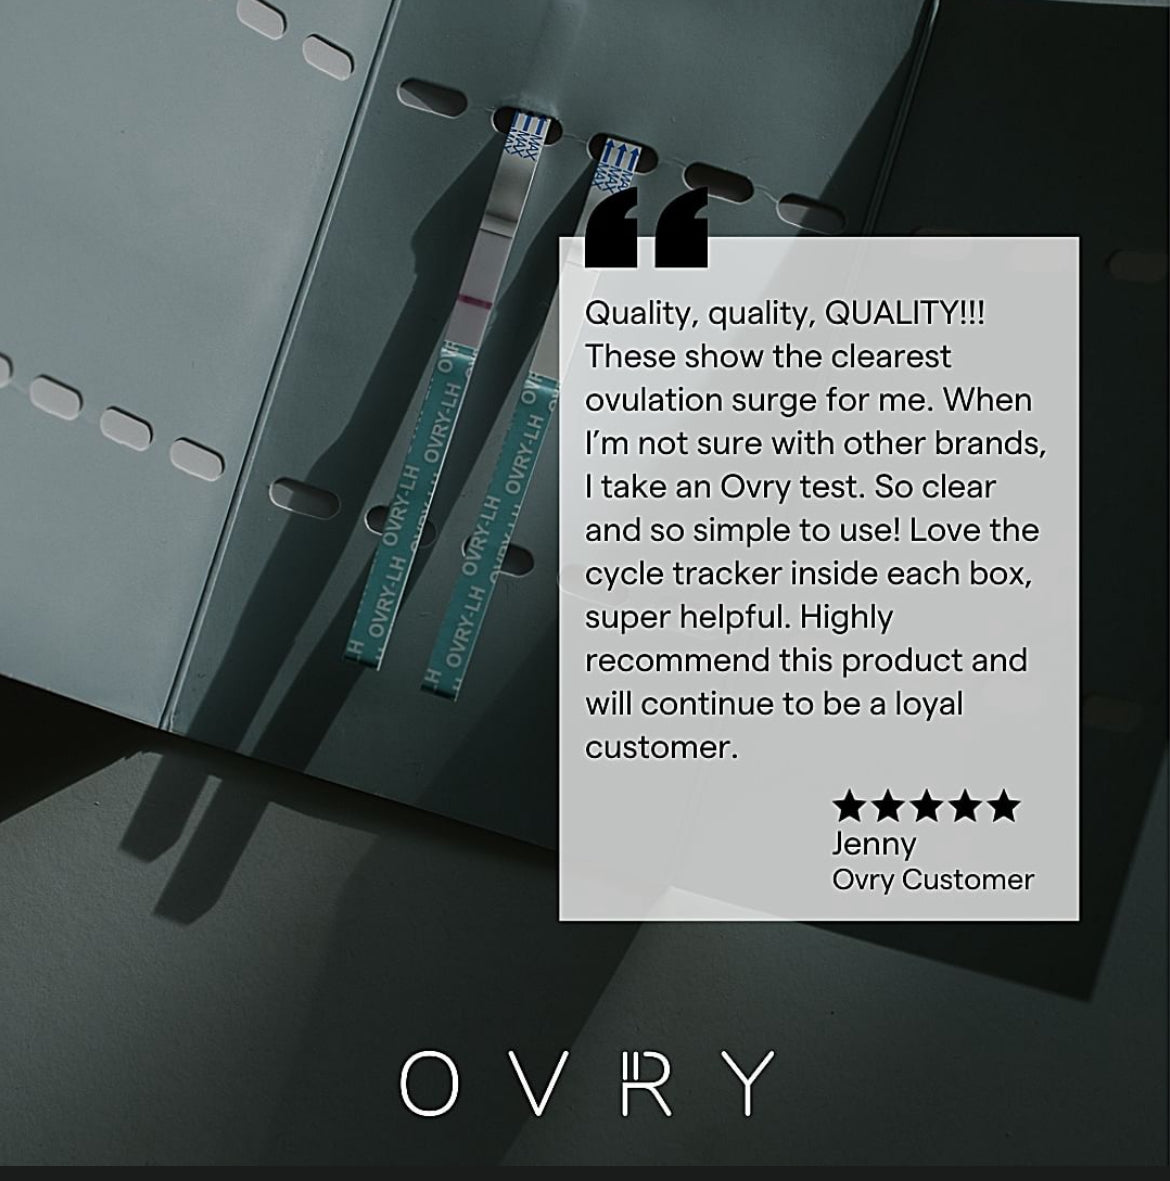 Ovry Ovulation Test Strips - 10 Tests